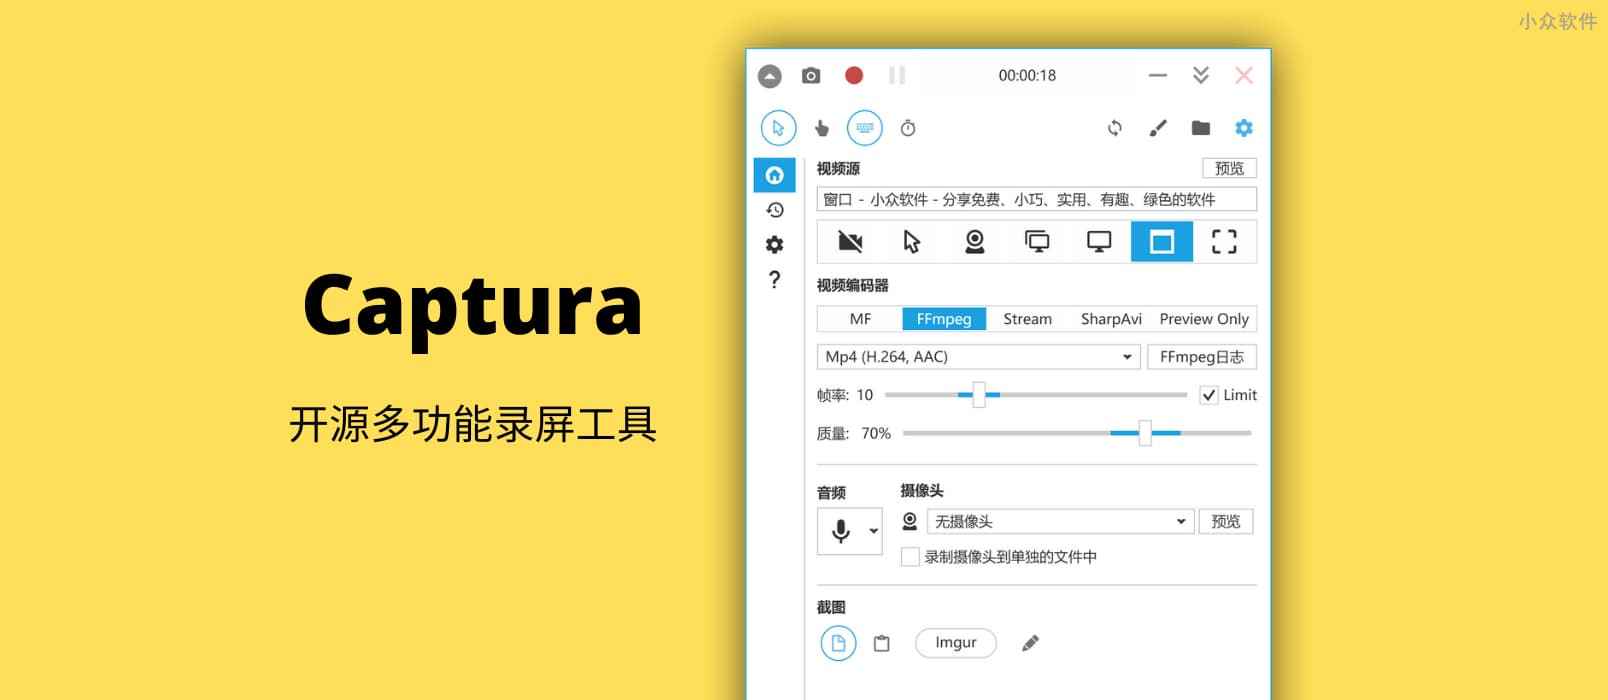 Captura – 带键盘按键录制的录屏工具，支持直播[Windows]